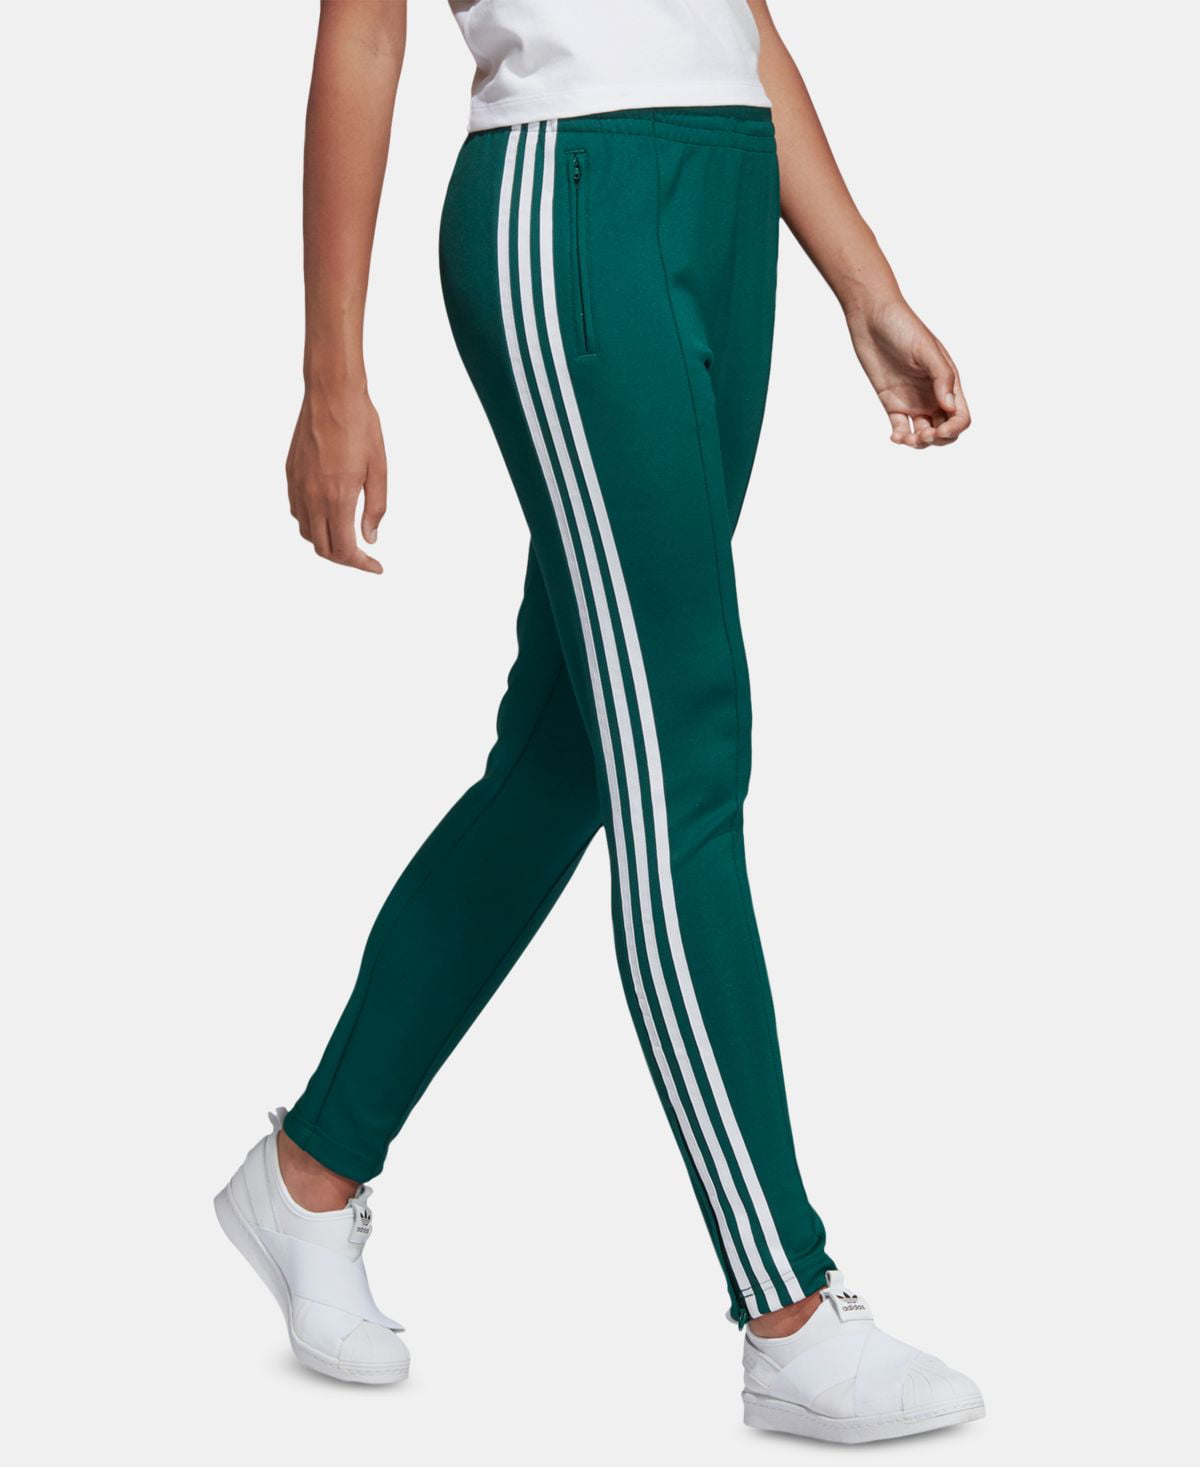 adidas Women's SST Track Green Size X-Large - Walmart.com